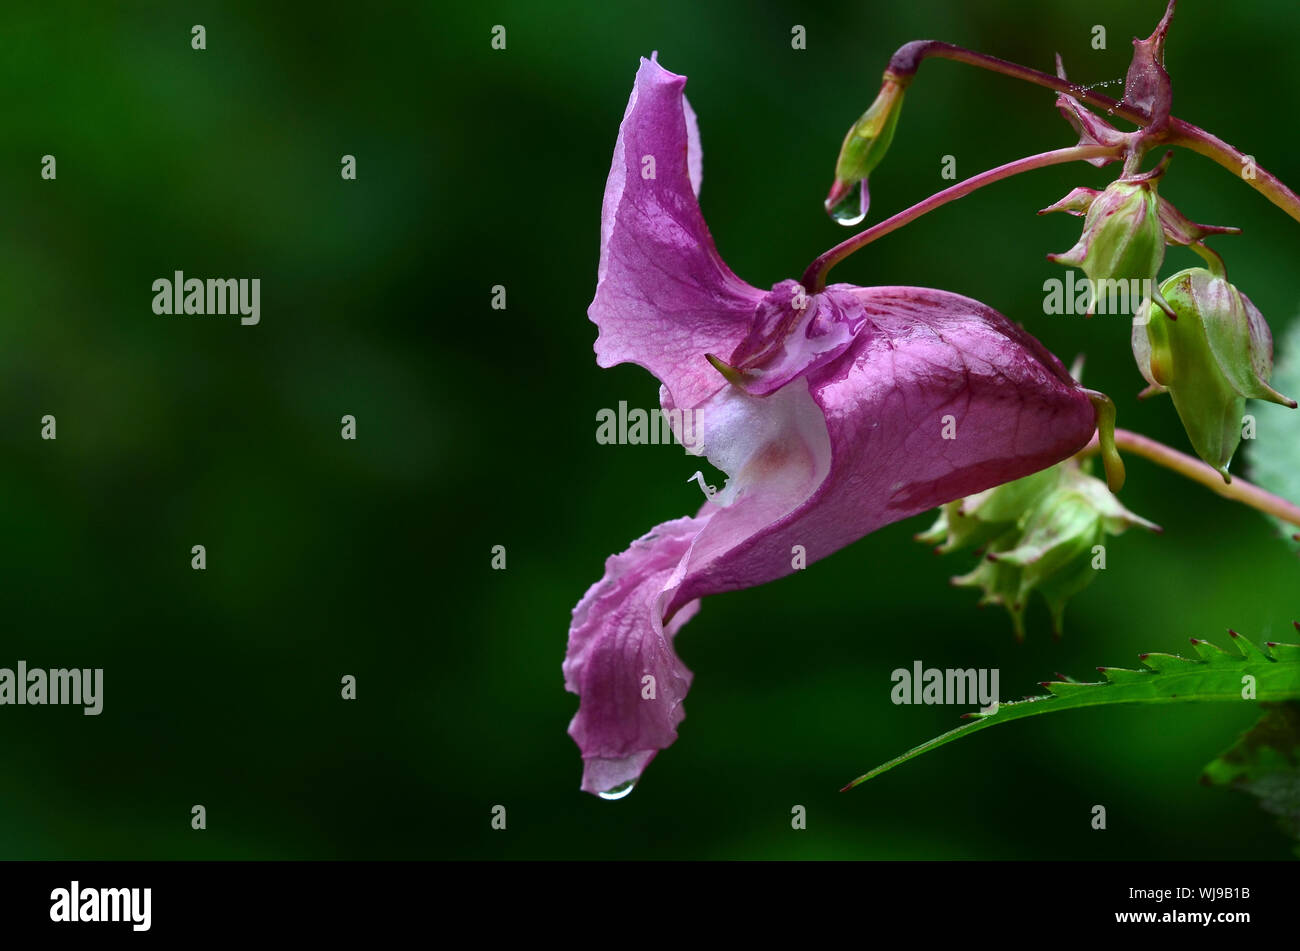 Indian or Himalayan balsam in bloom. Dorset, UK September 2017 Stock Photo